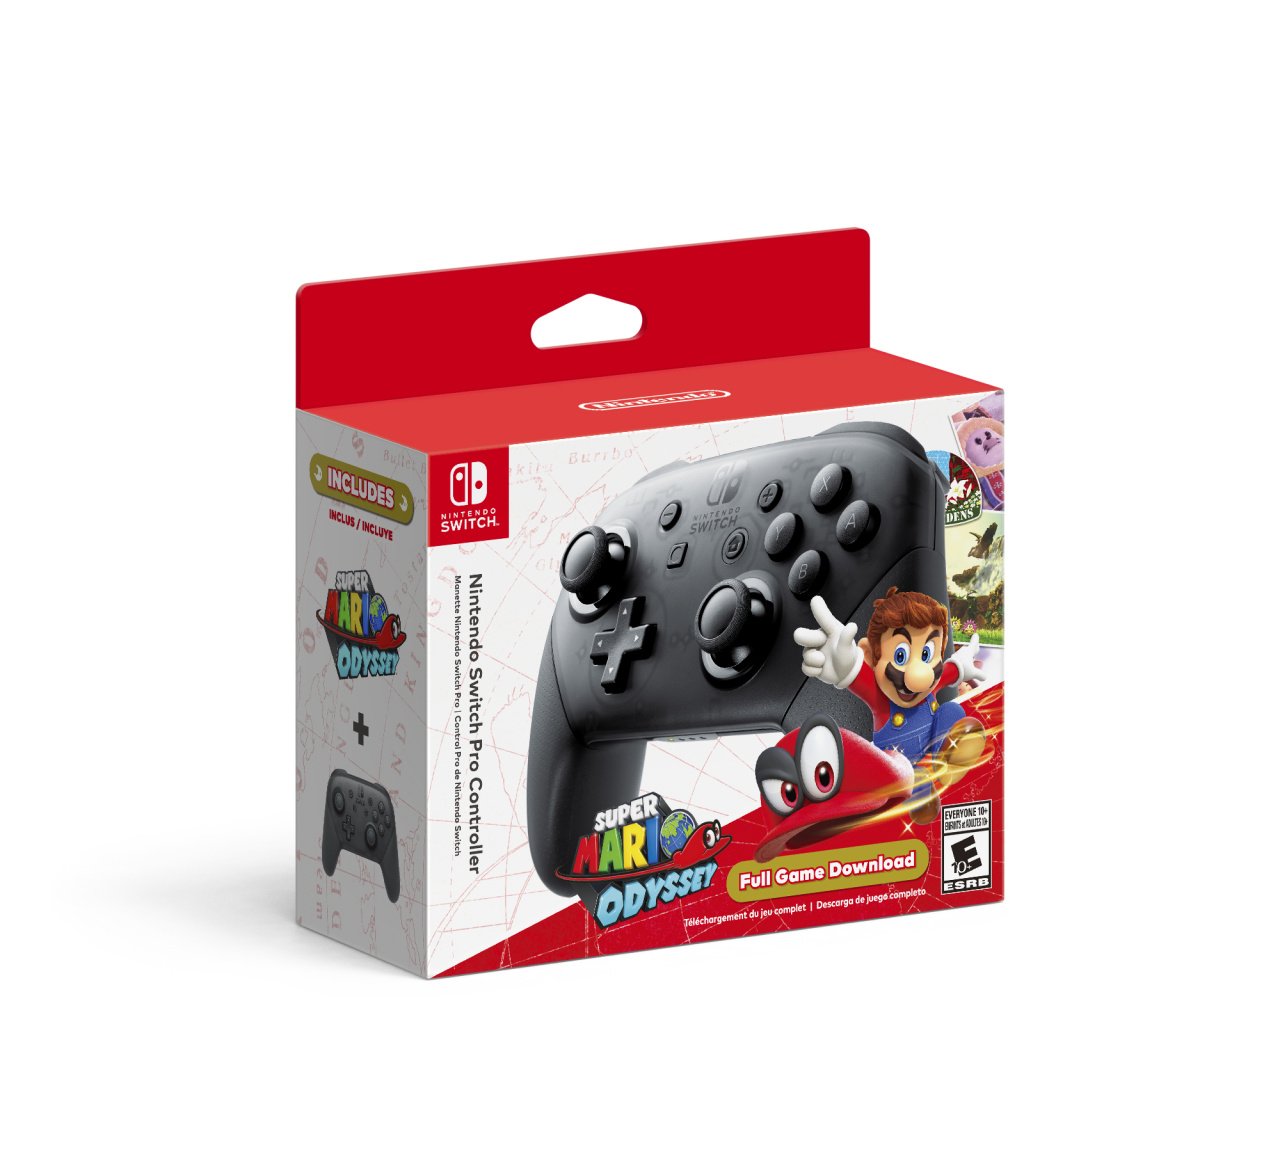 Switch Pro Controller + Super Mario Odyssey Bundle Arriving Next